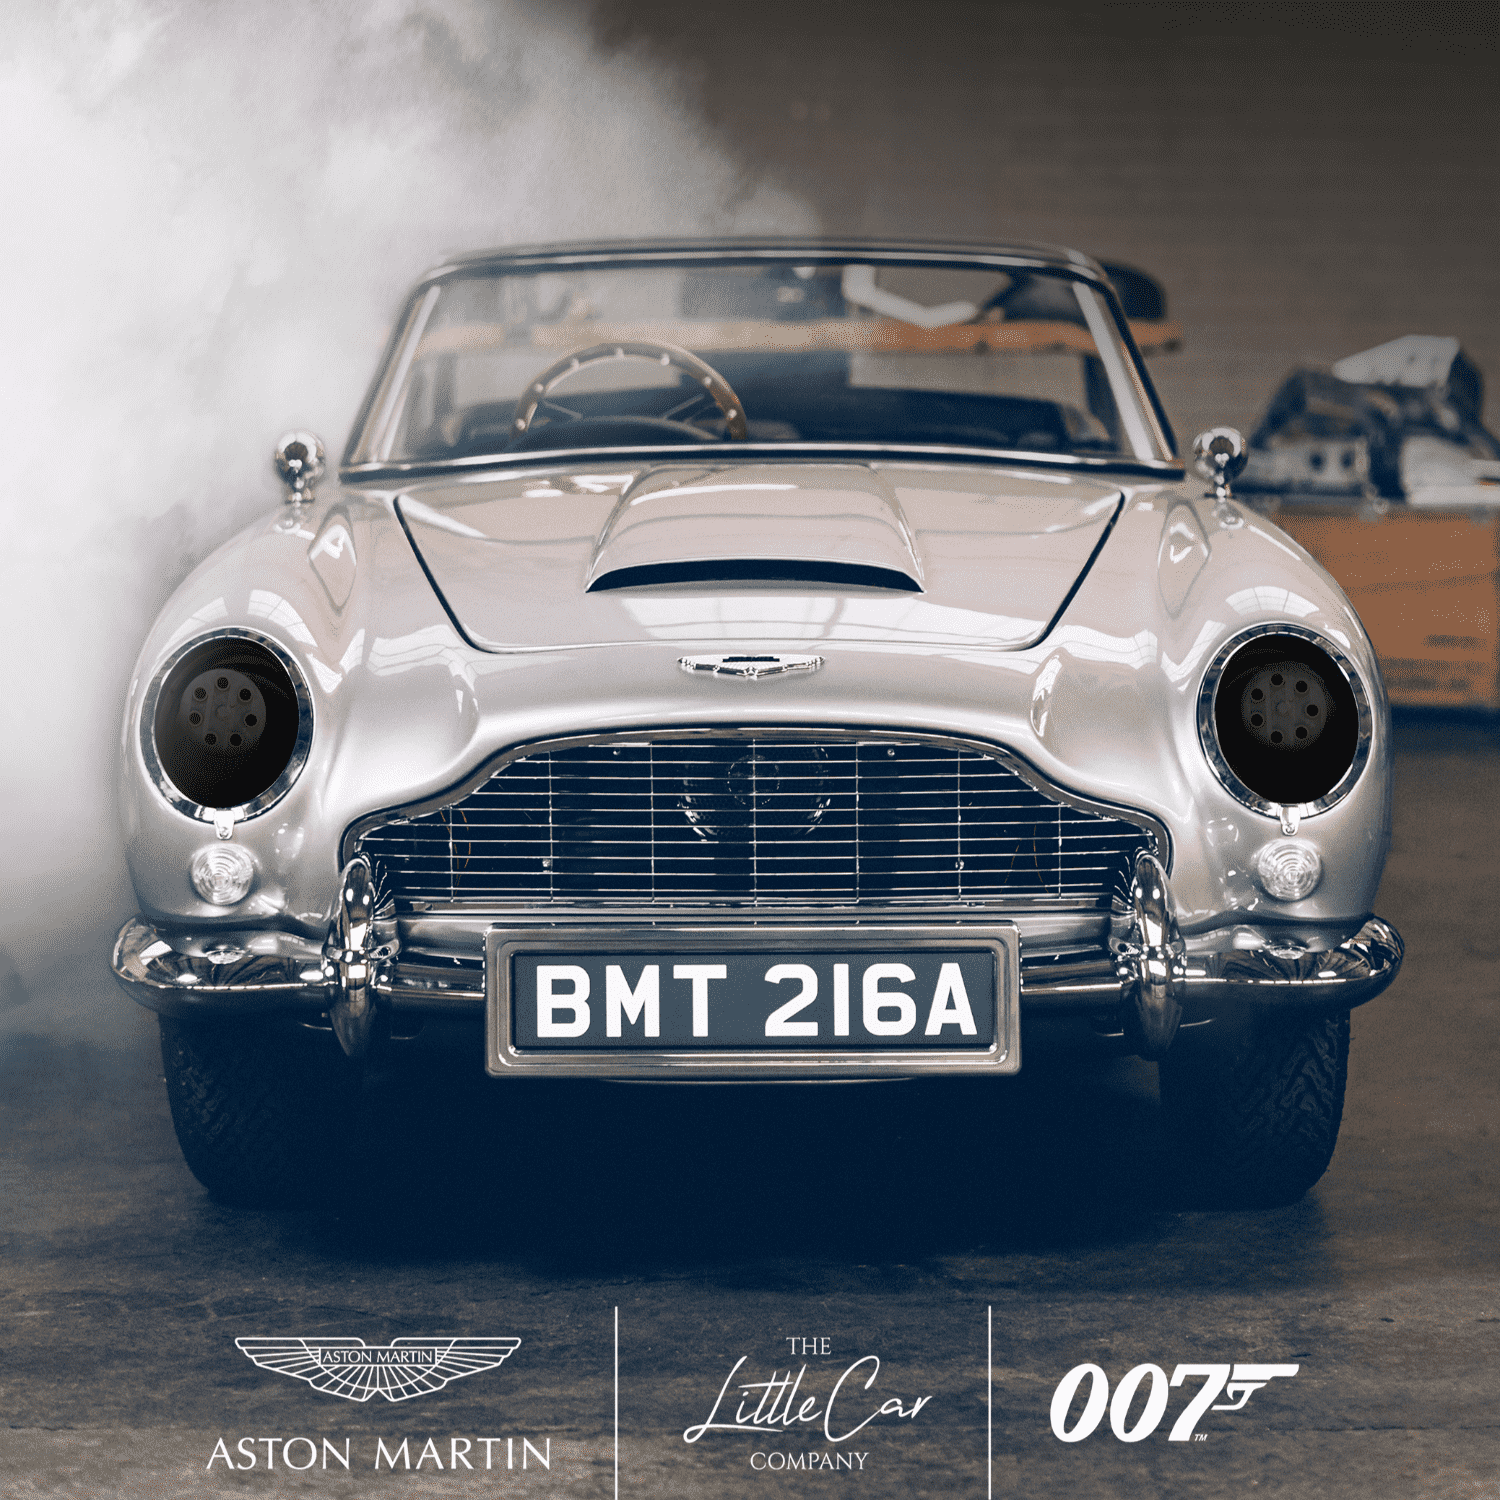 007 James Bond Aston Martin DB5 Junior Car - No Time To Die Edition - By The Little Car Company (DEPOSIT) CAR TLCC 